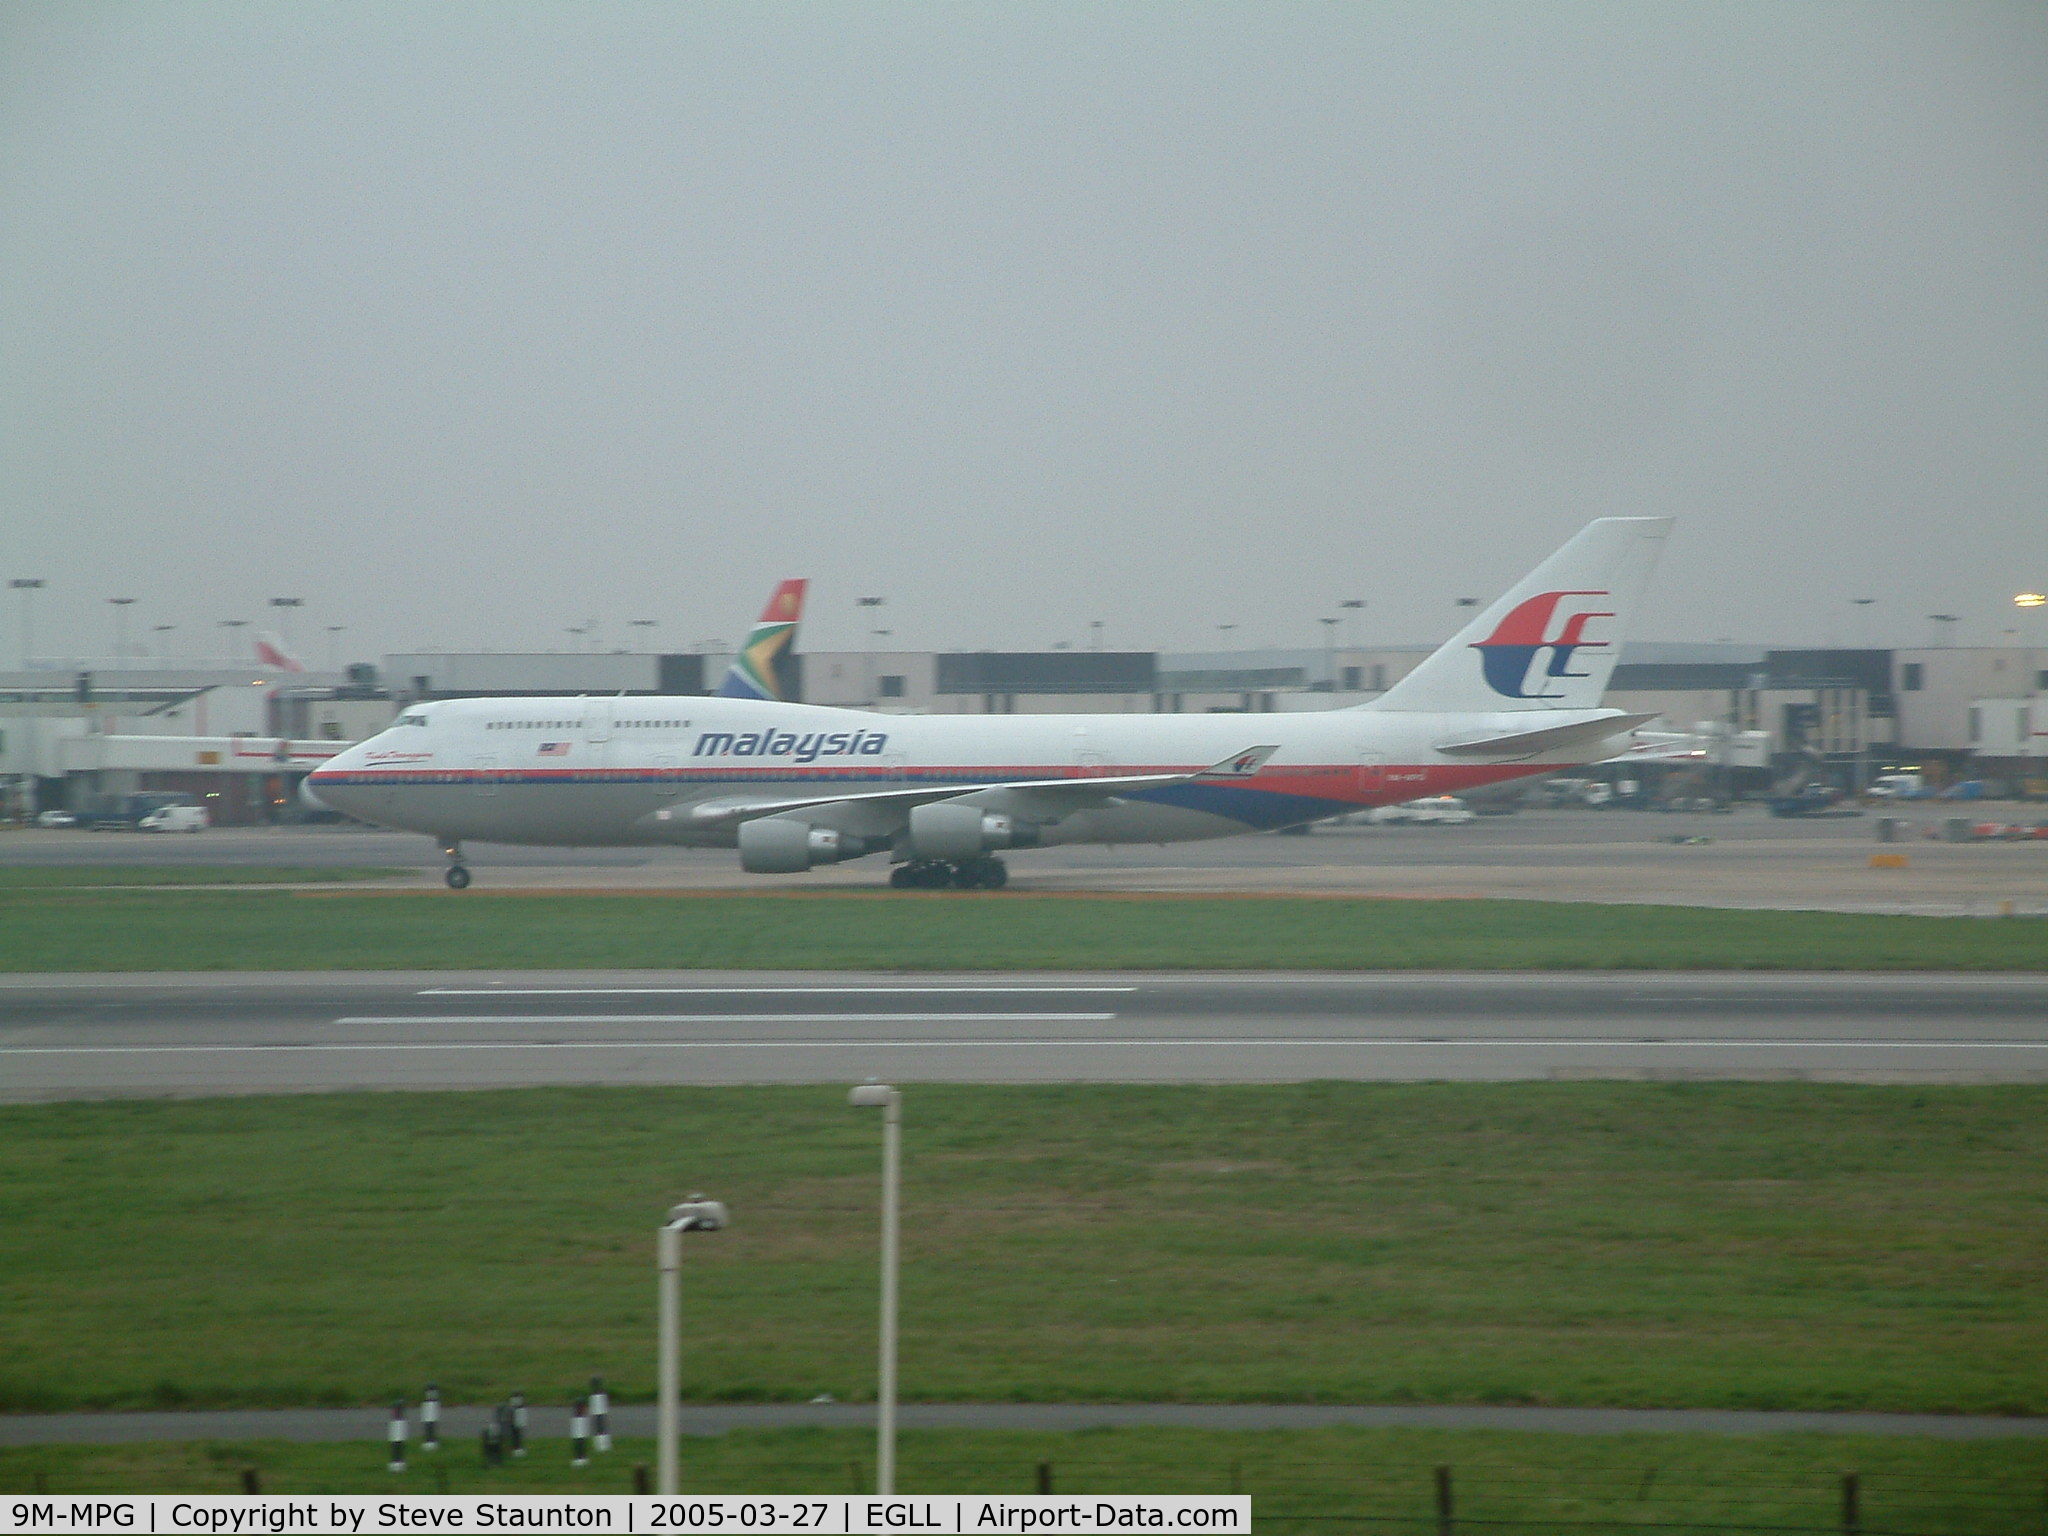 9M-MPG, 1994 Boeing 747-4H6 C/N 25703, Taken at Heathrow Airport March 2005